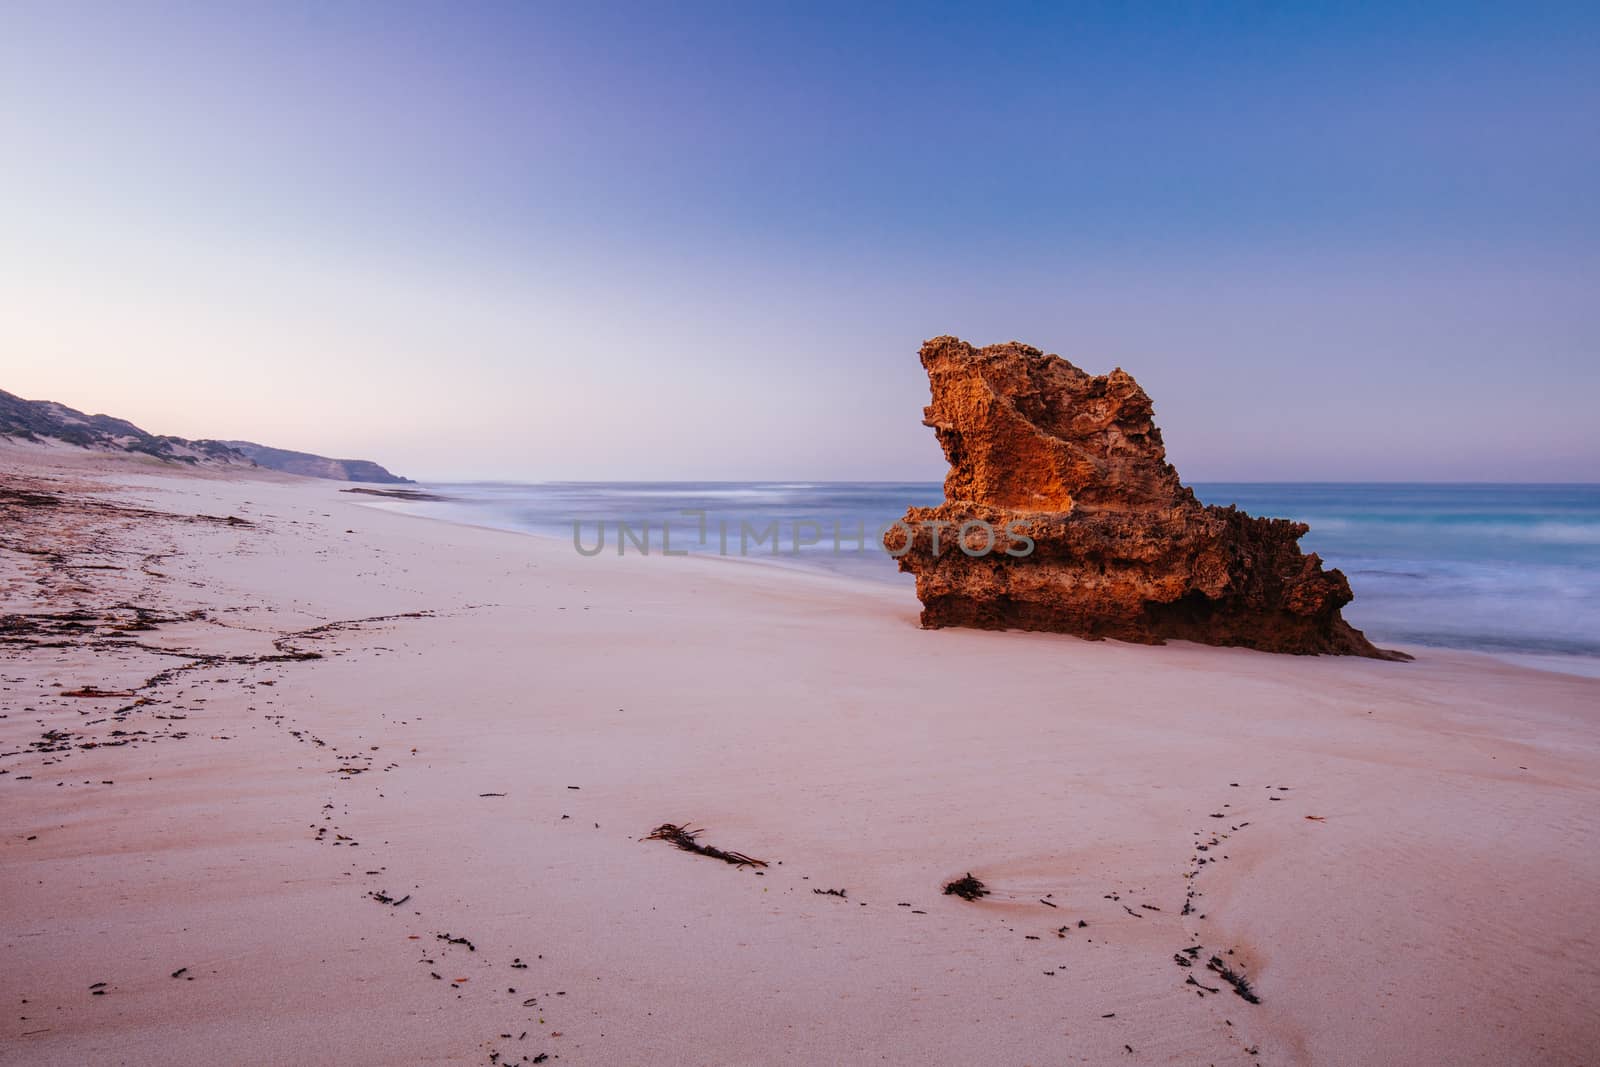 The idyllic Number Sixteen Beach at sunrise in Rye, Victoria, Australia